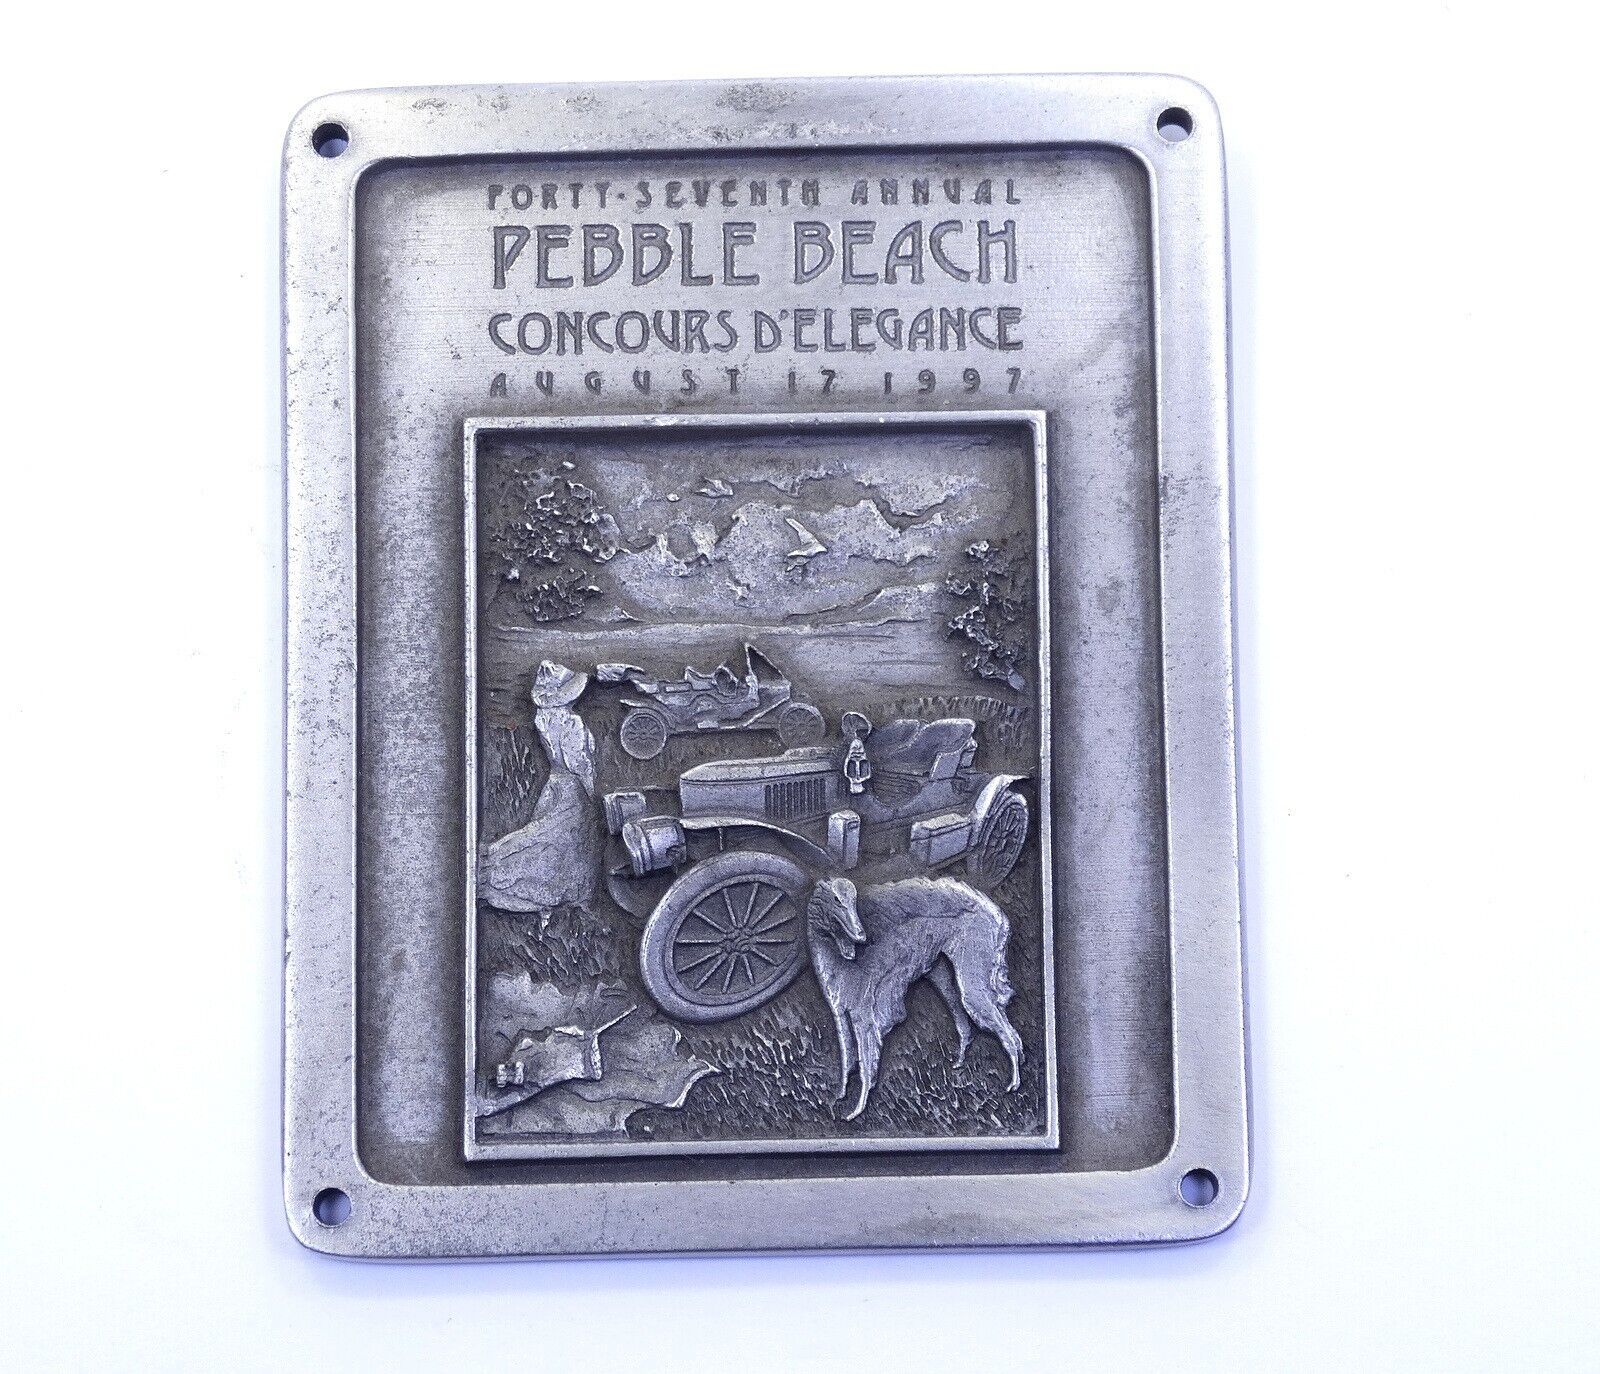 47th Annual Pebble Beach 1997 CONCOURS D'ELEGANCE Pewter Dash Plaque #490/950